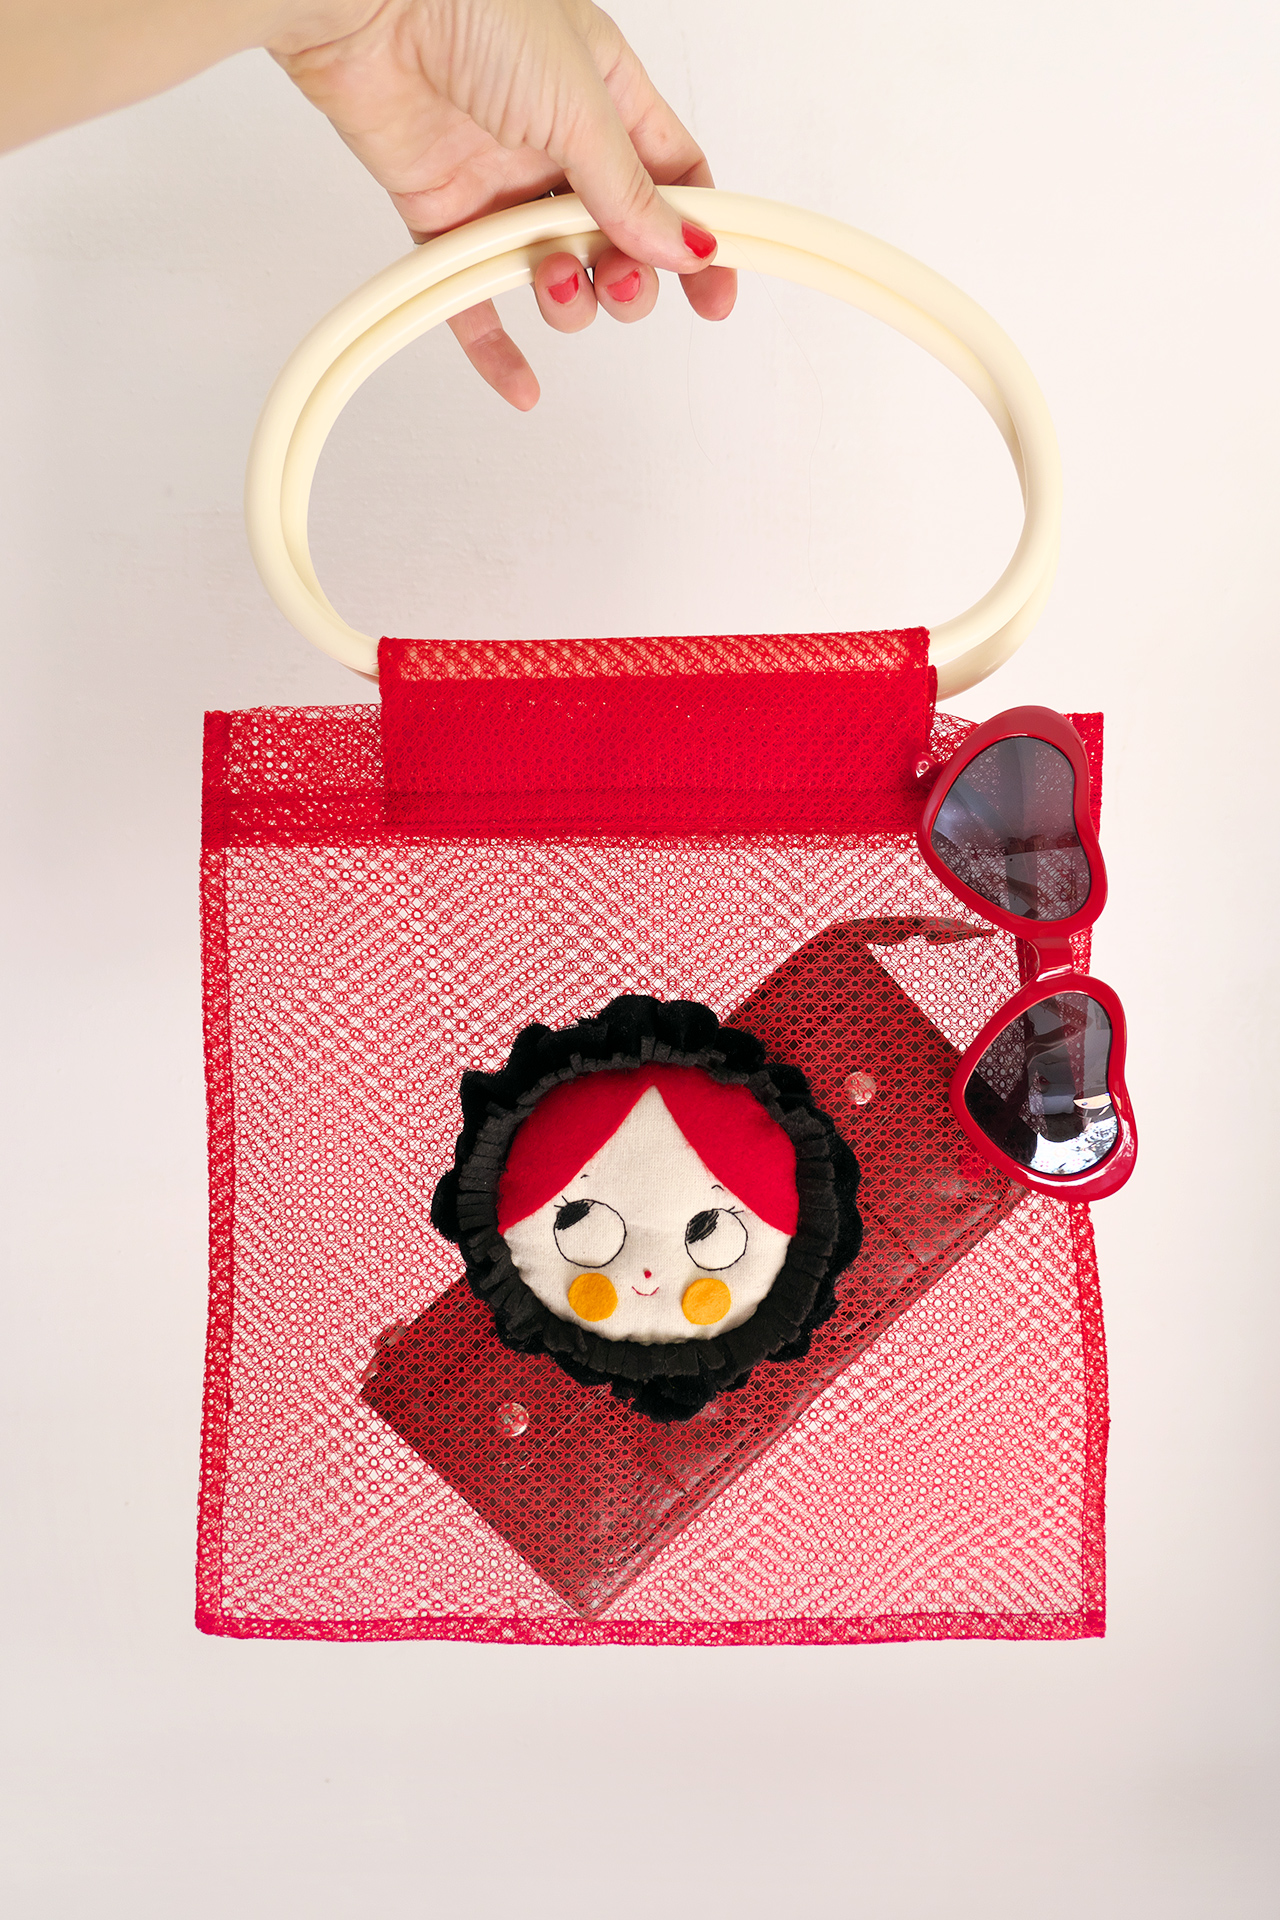 misako mimoko: Shop Update! Carmen Handbags